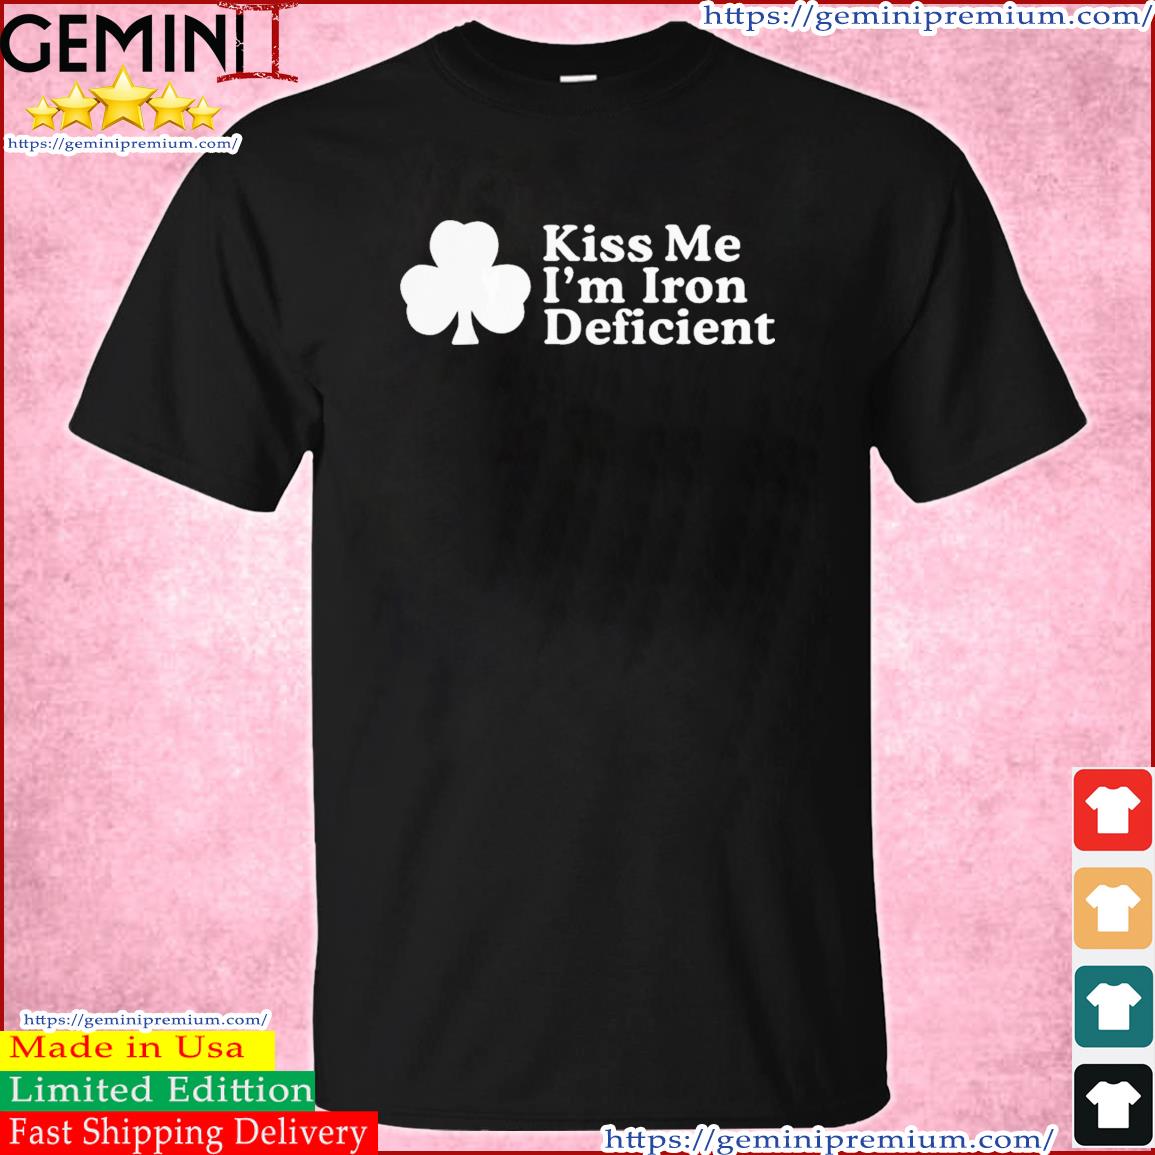 Kiss Me, I'm Iron Deficient St Patrick's Day Shirt